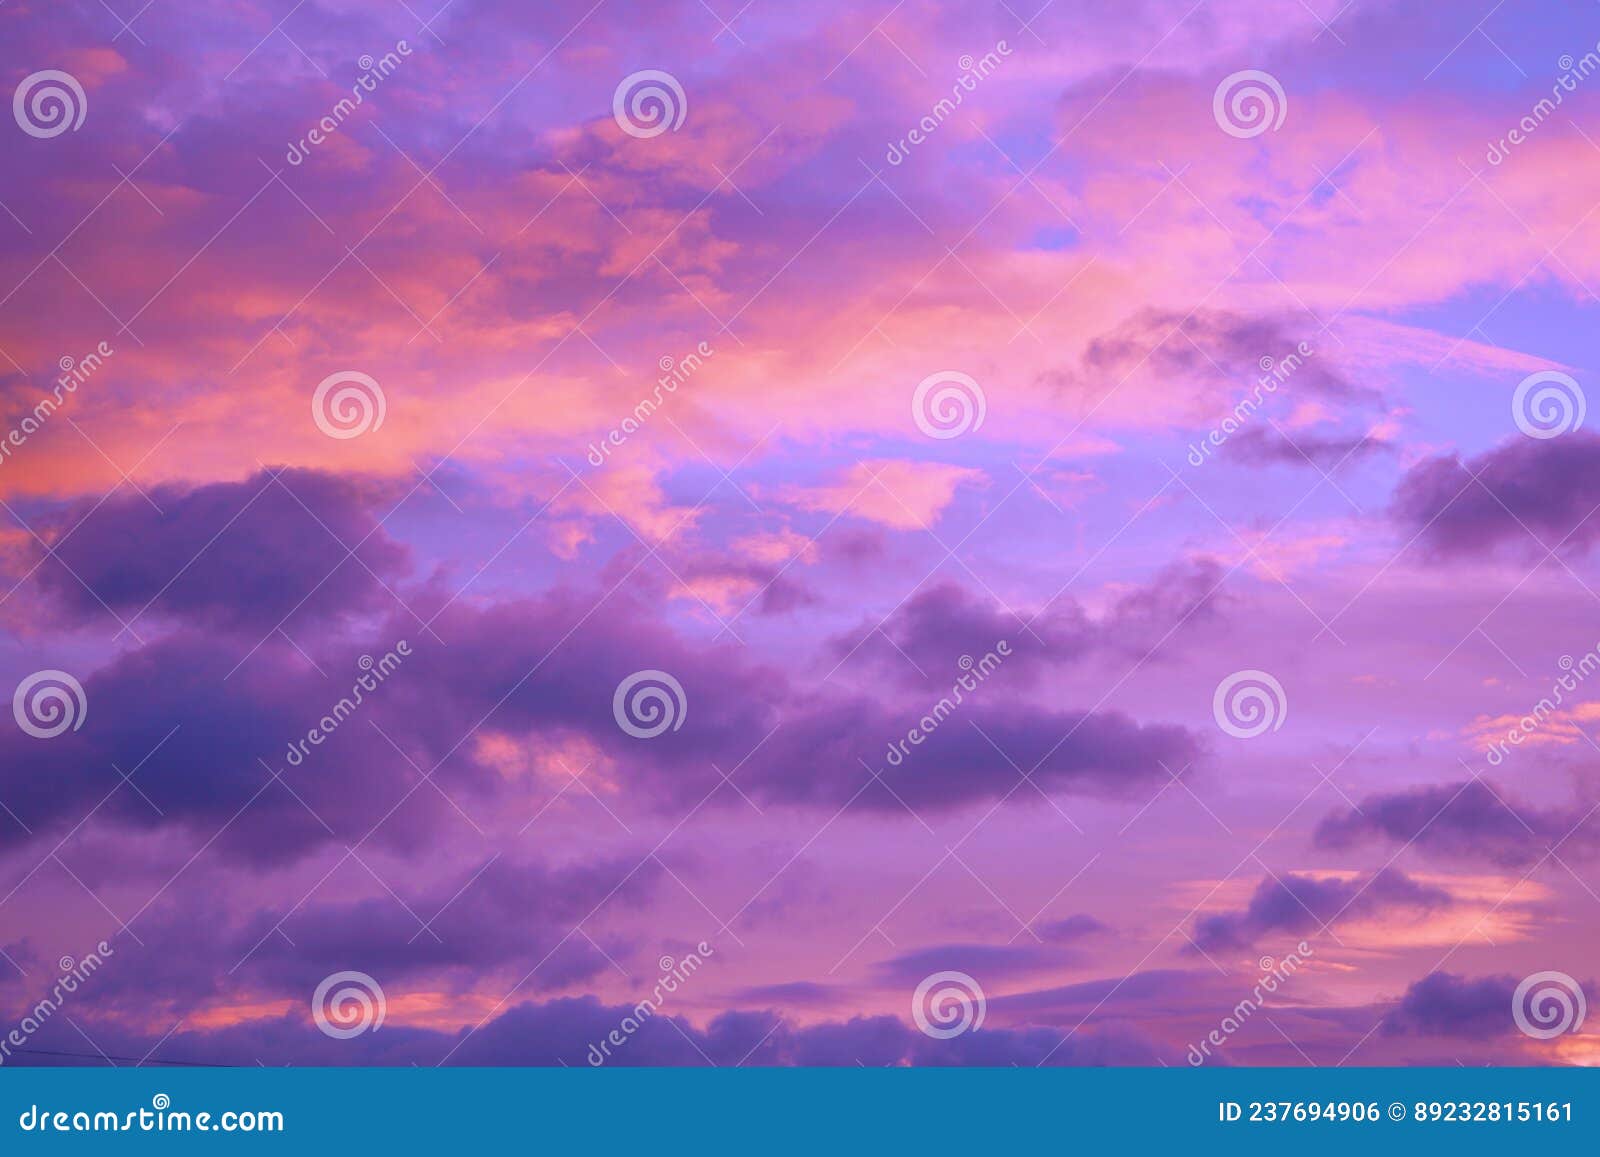 Purple Orange Pink Sunset. Beautiful Evening Sky with Clouds ...